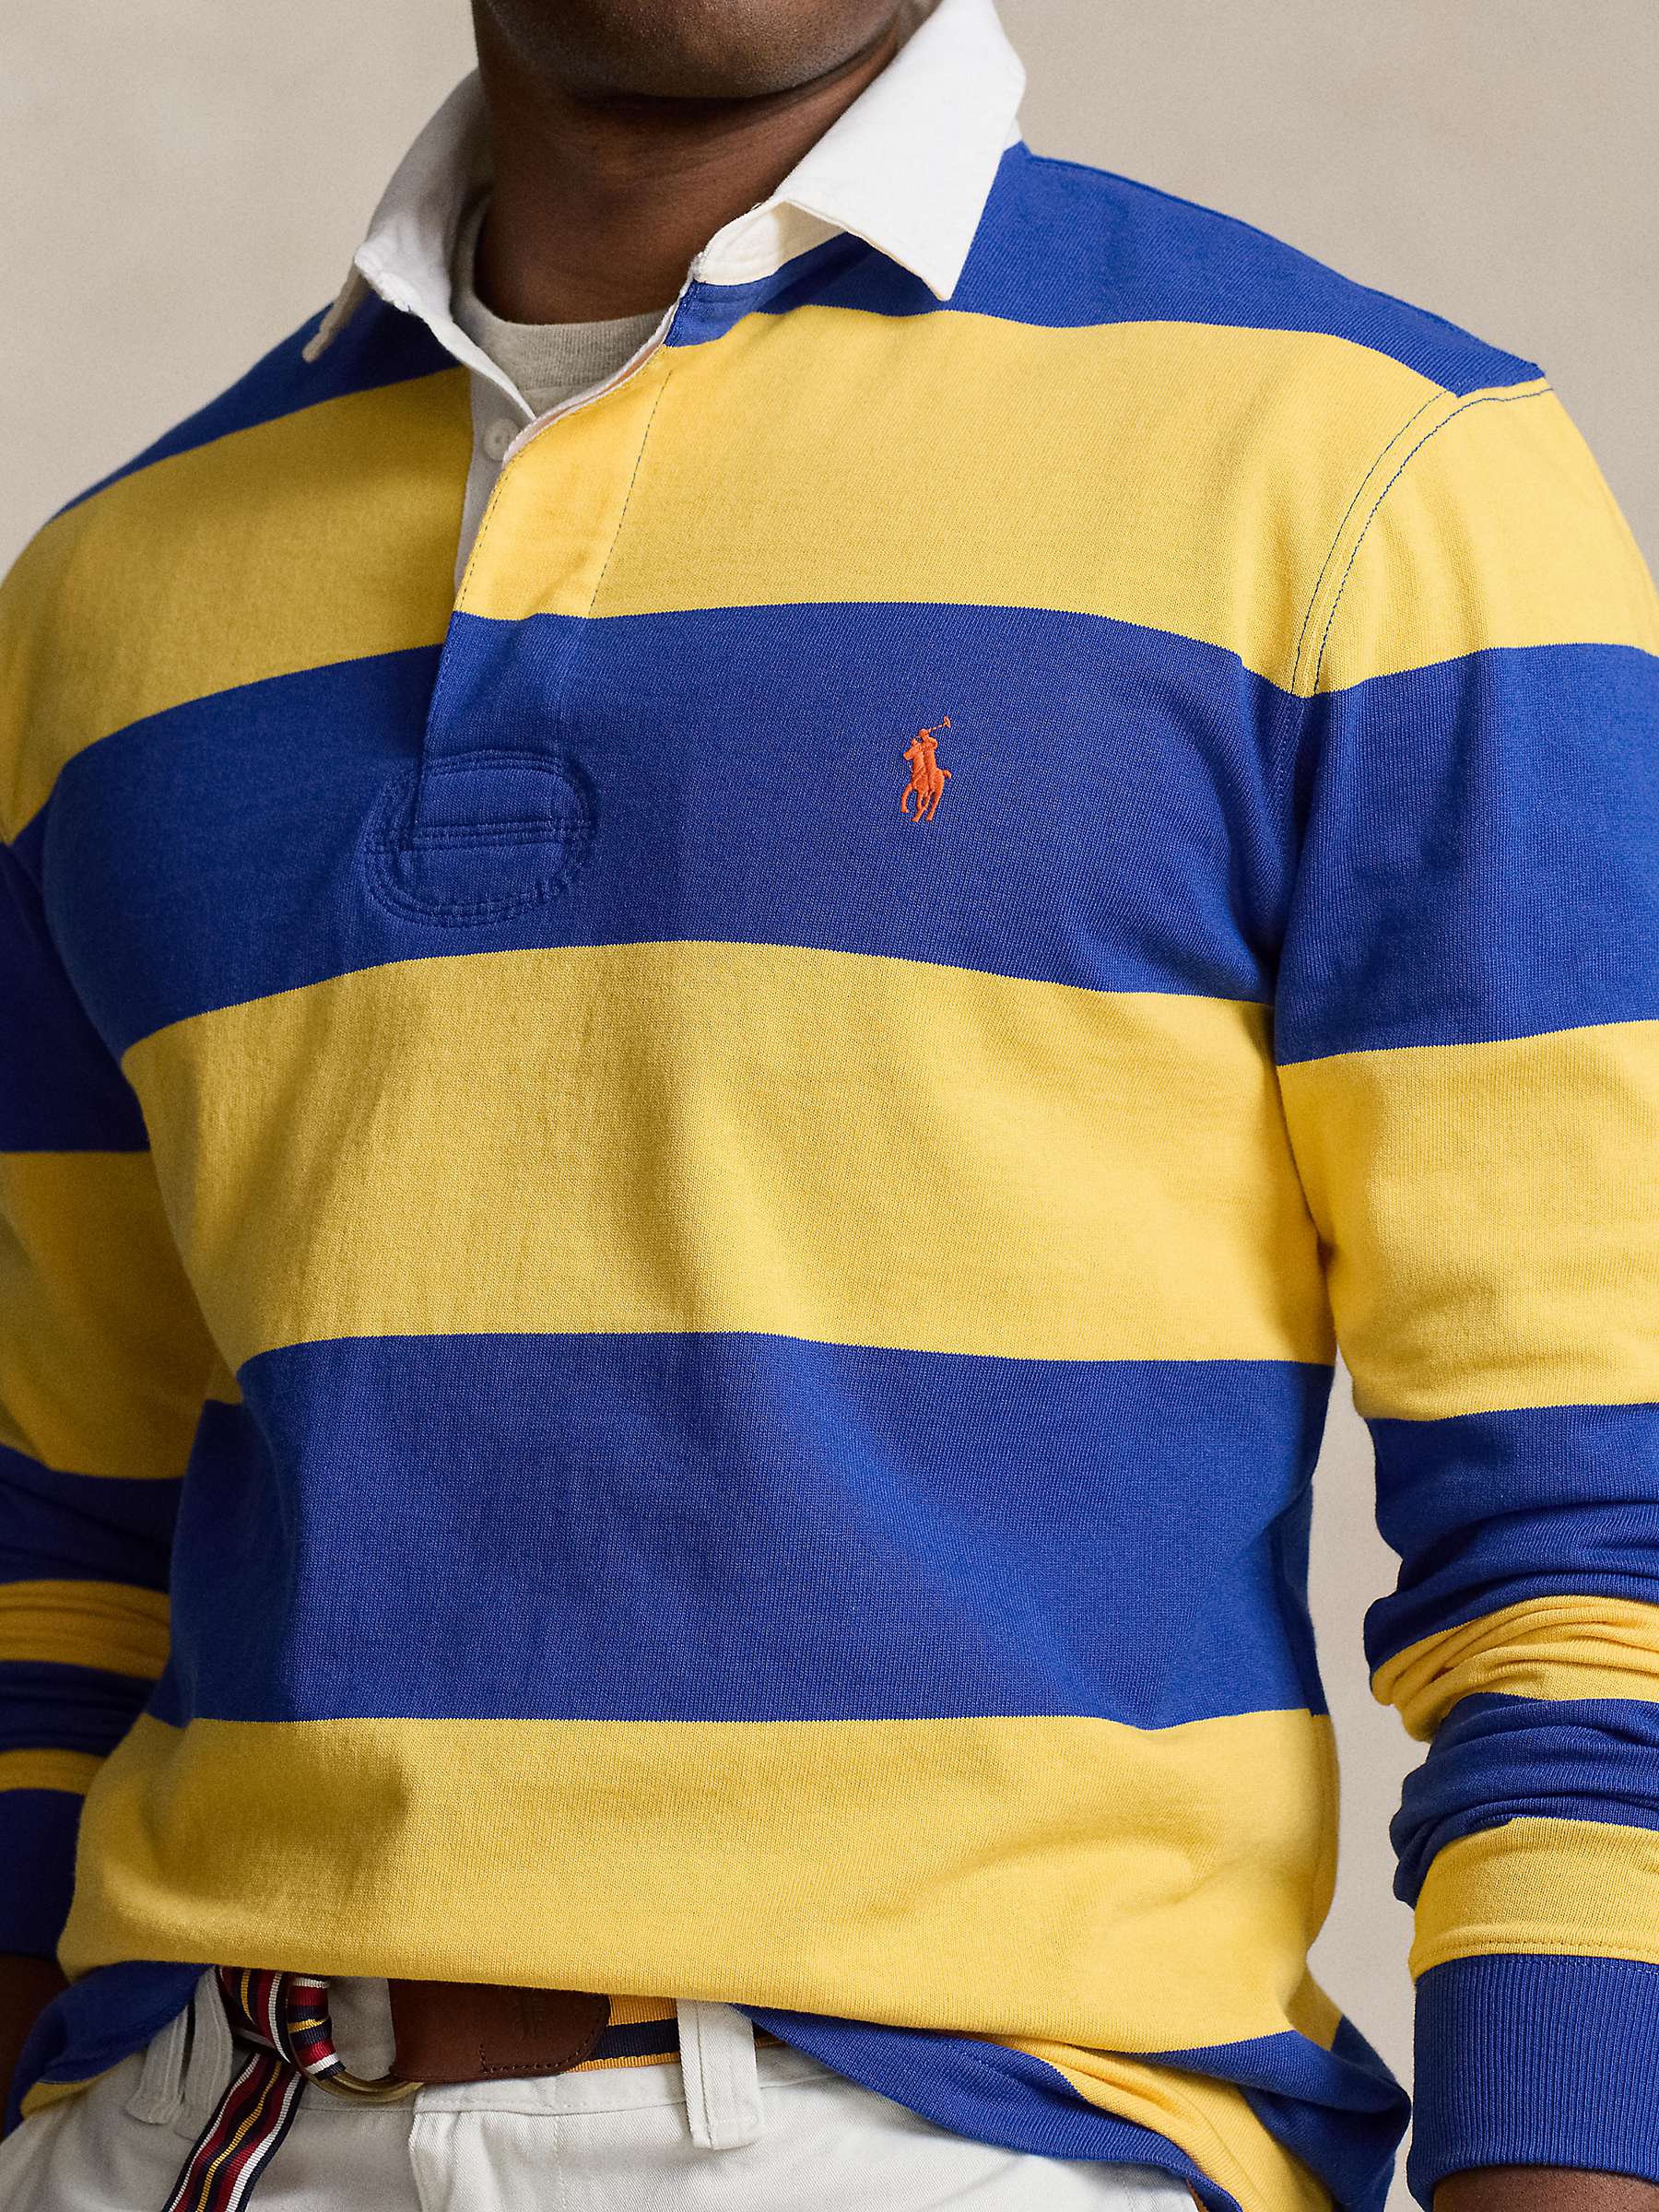 Buy Ralph Lauren Big & Tall Stripe Rugby Shirt, Chrome Yellow/Cruise Royal Blue Online at johnlewis.com